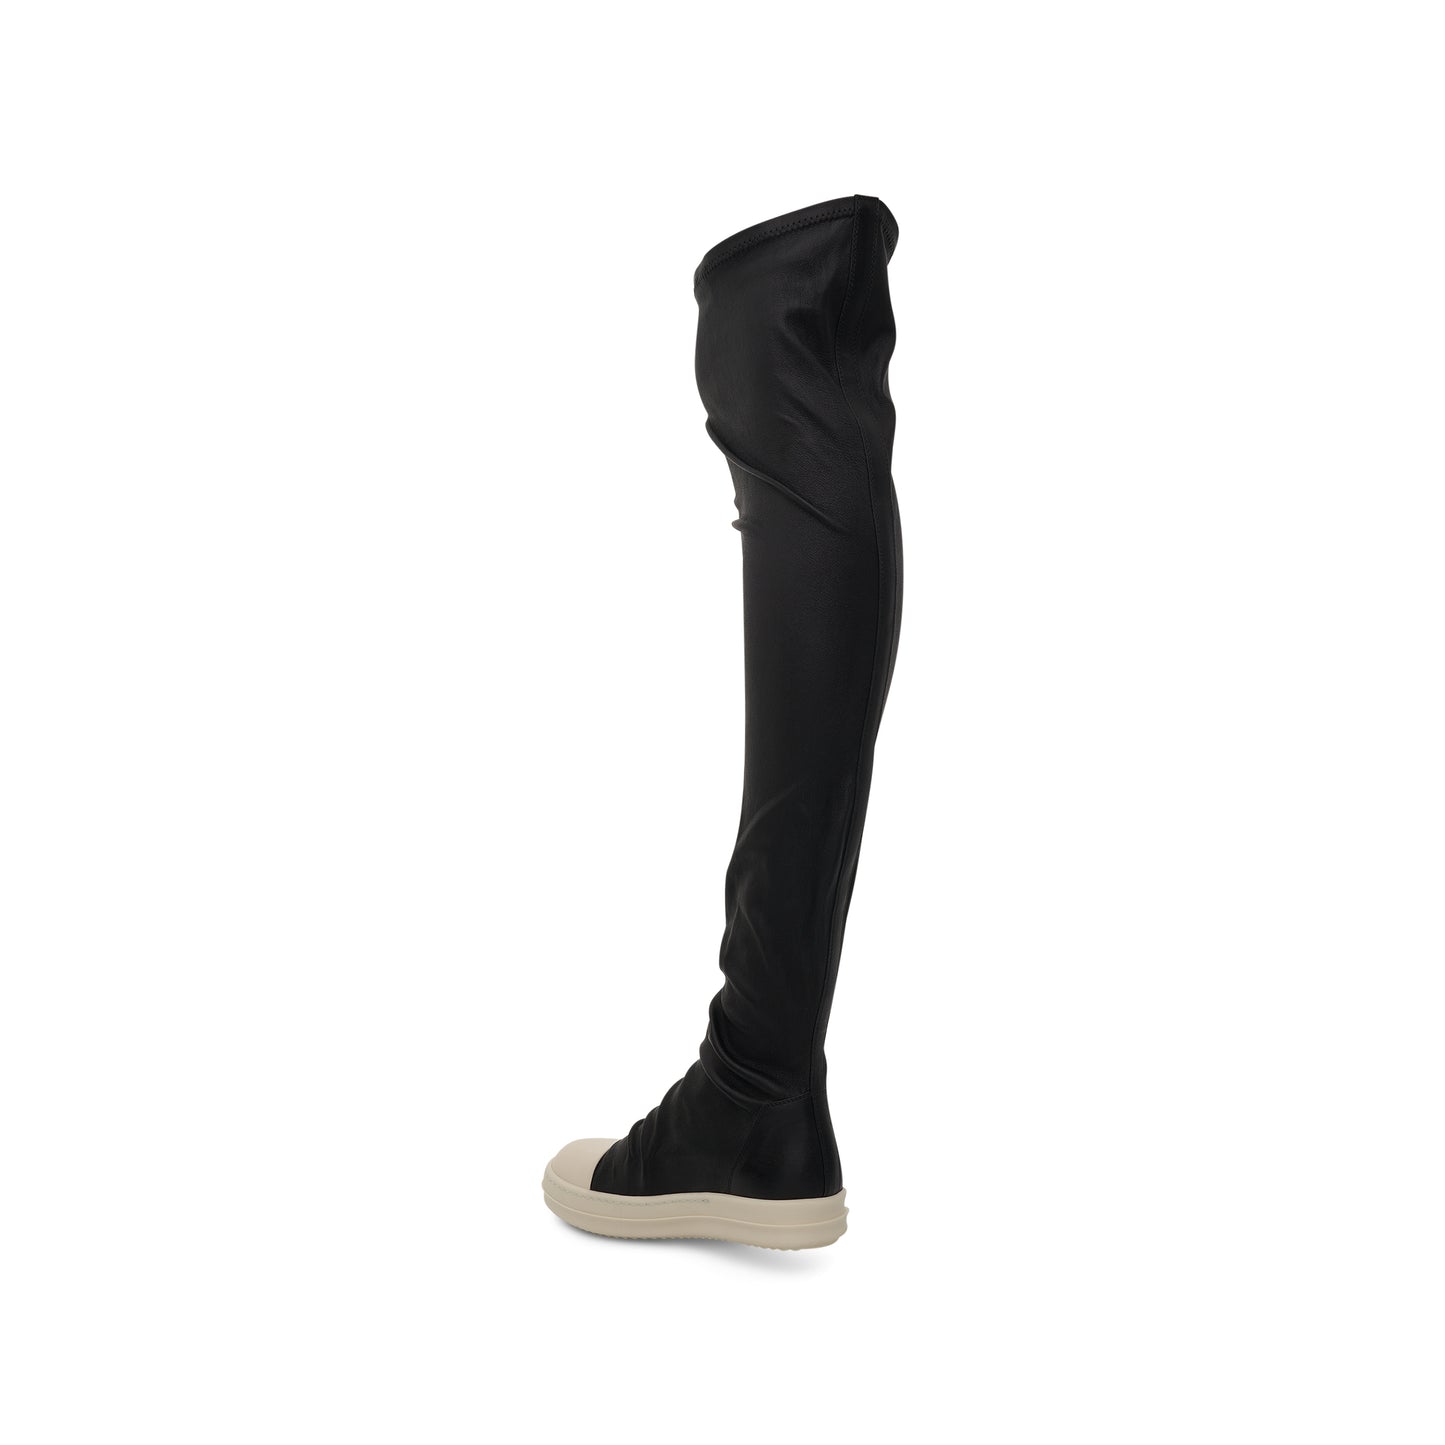 Shop Women's Knee High Boots | DSW